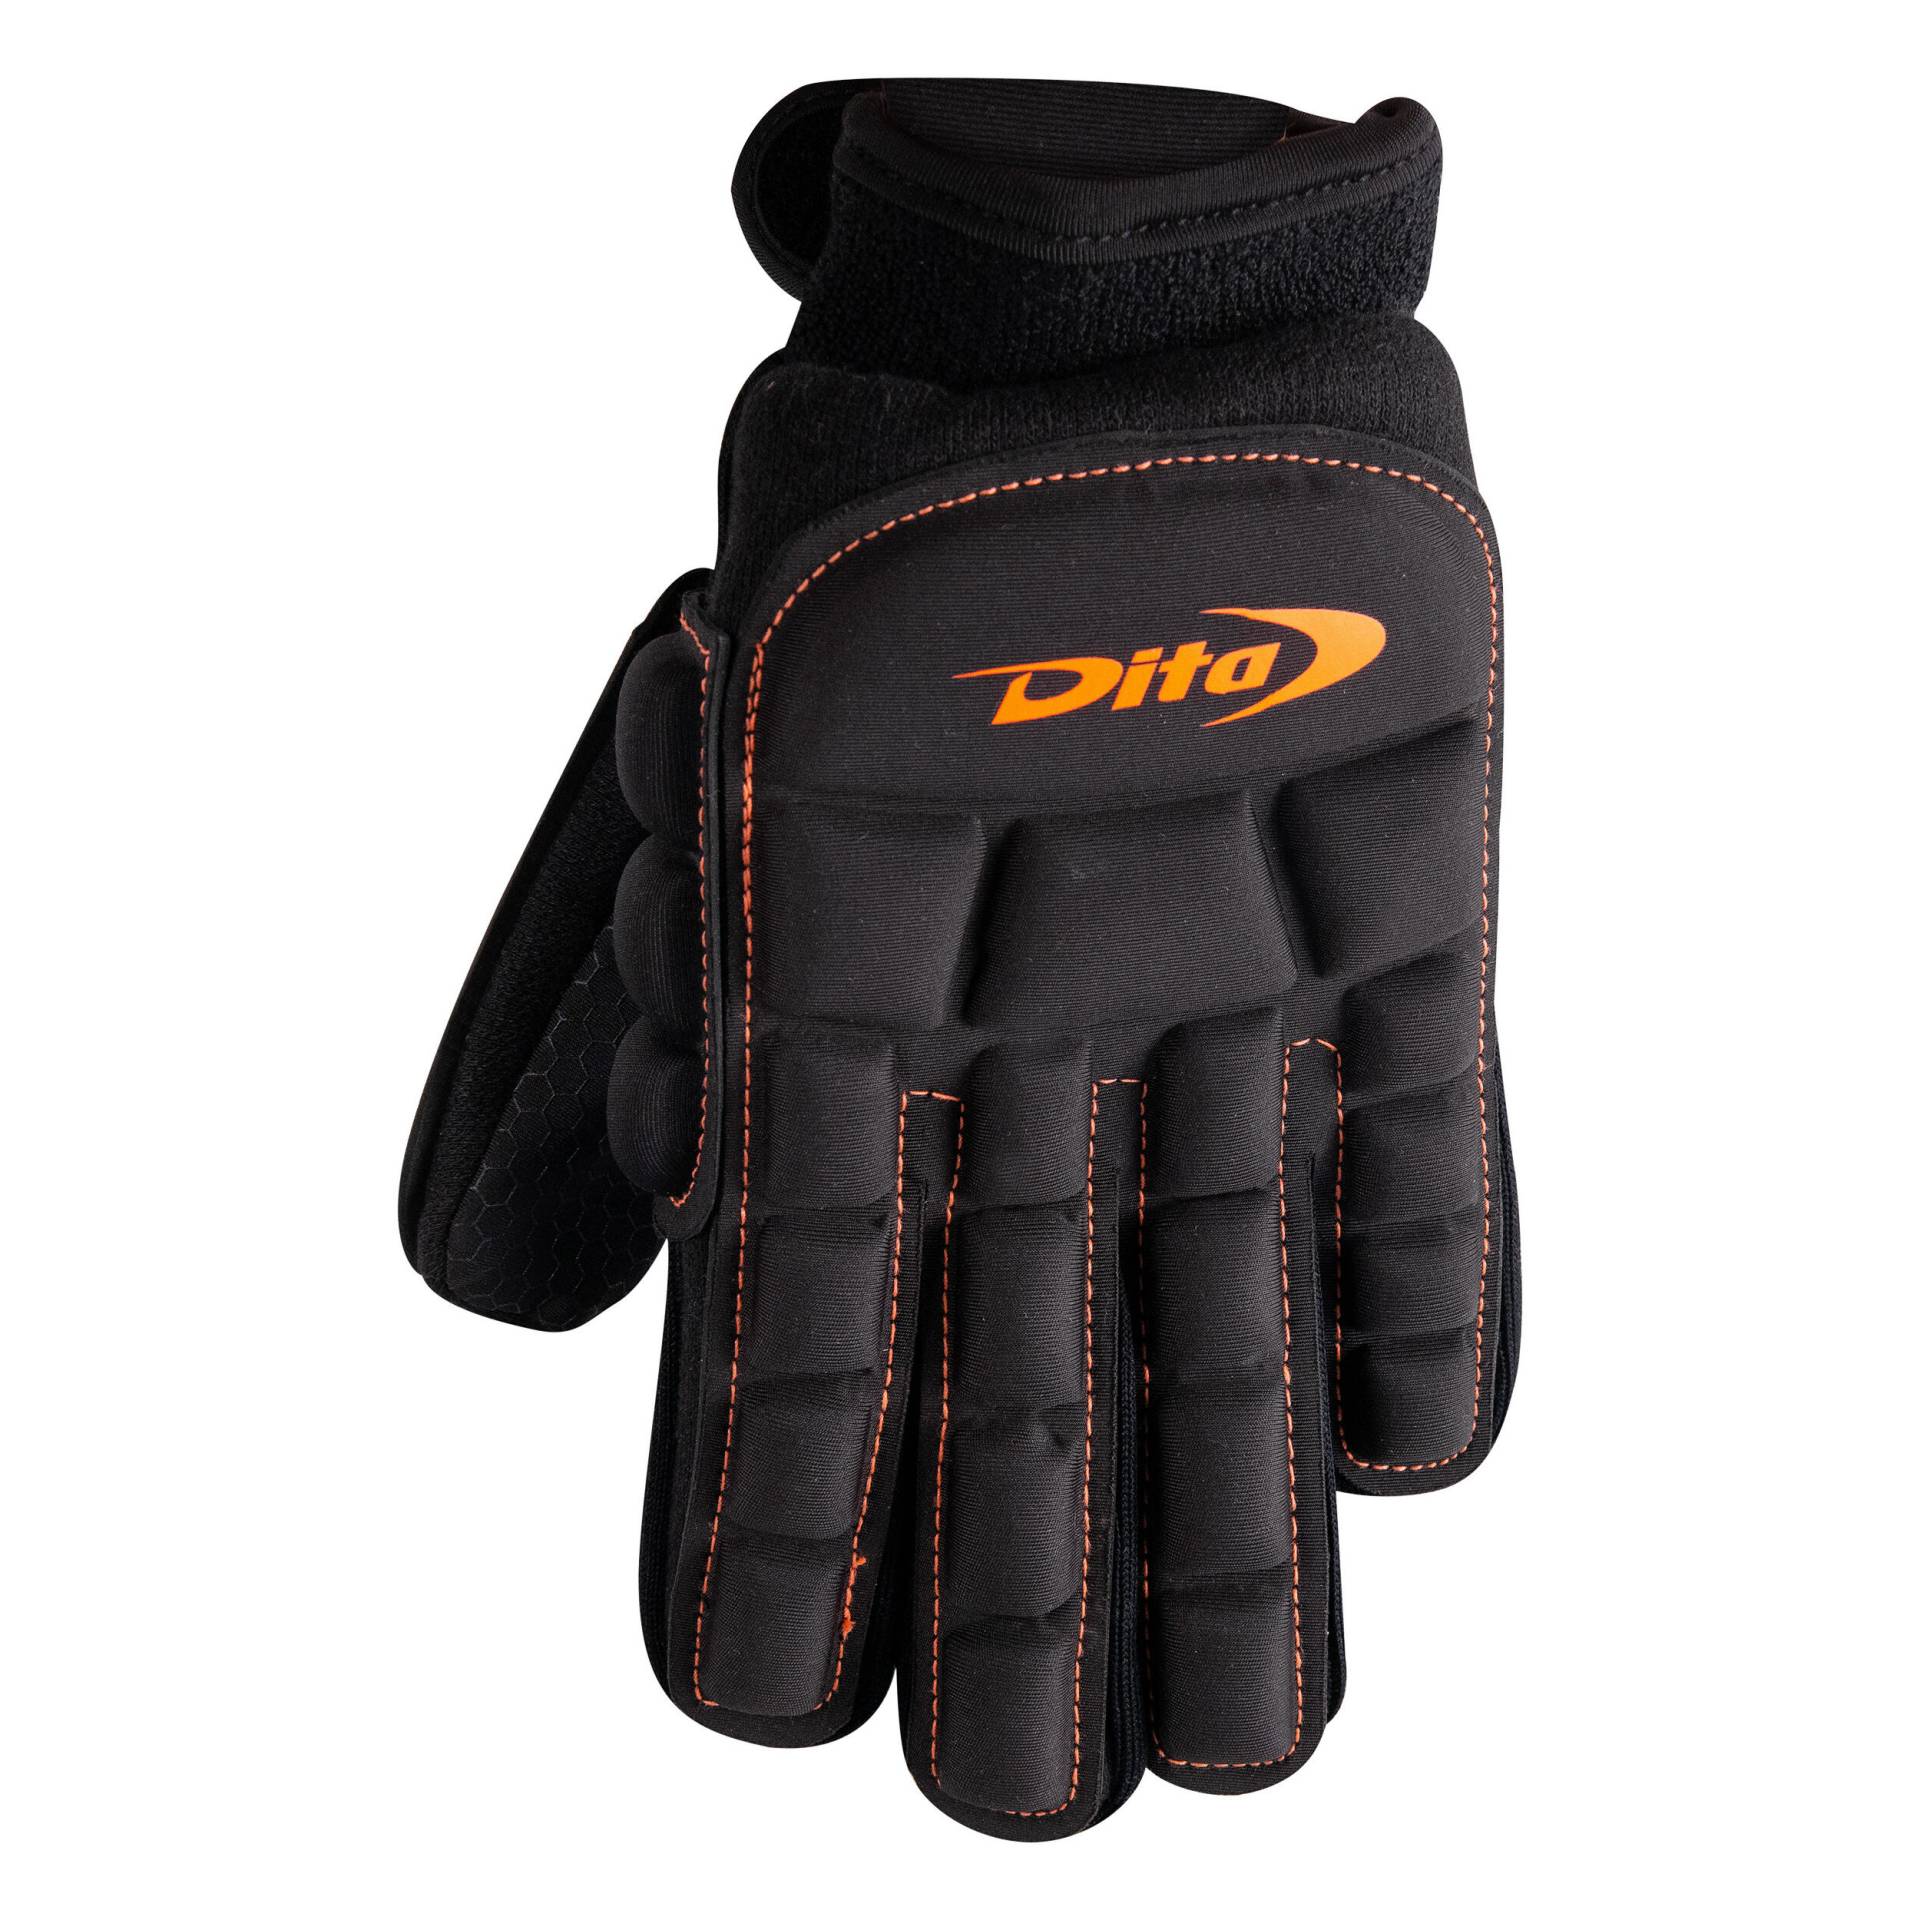 Damen/Herren/Jugendliche Indoor Linke Hand Hockey Handschuh - Dita Xtreme Pro von Dita